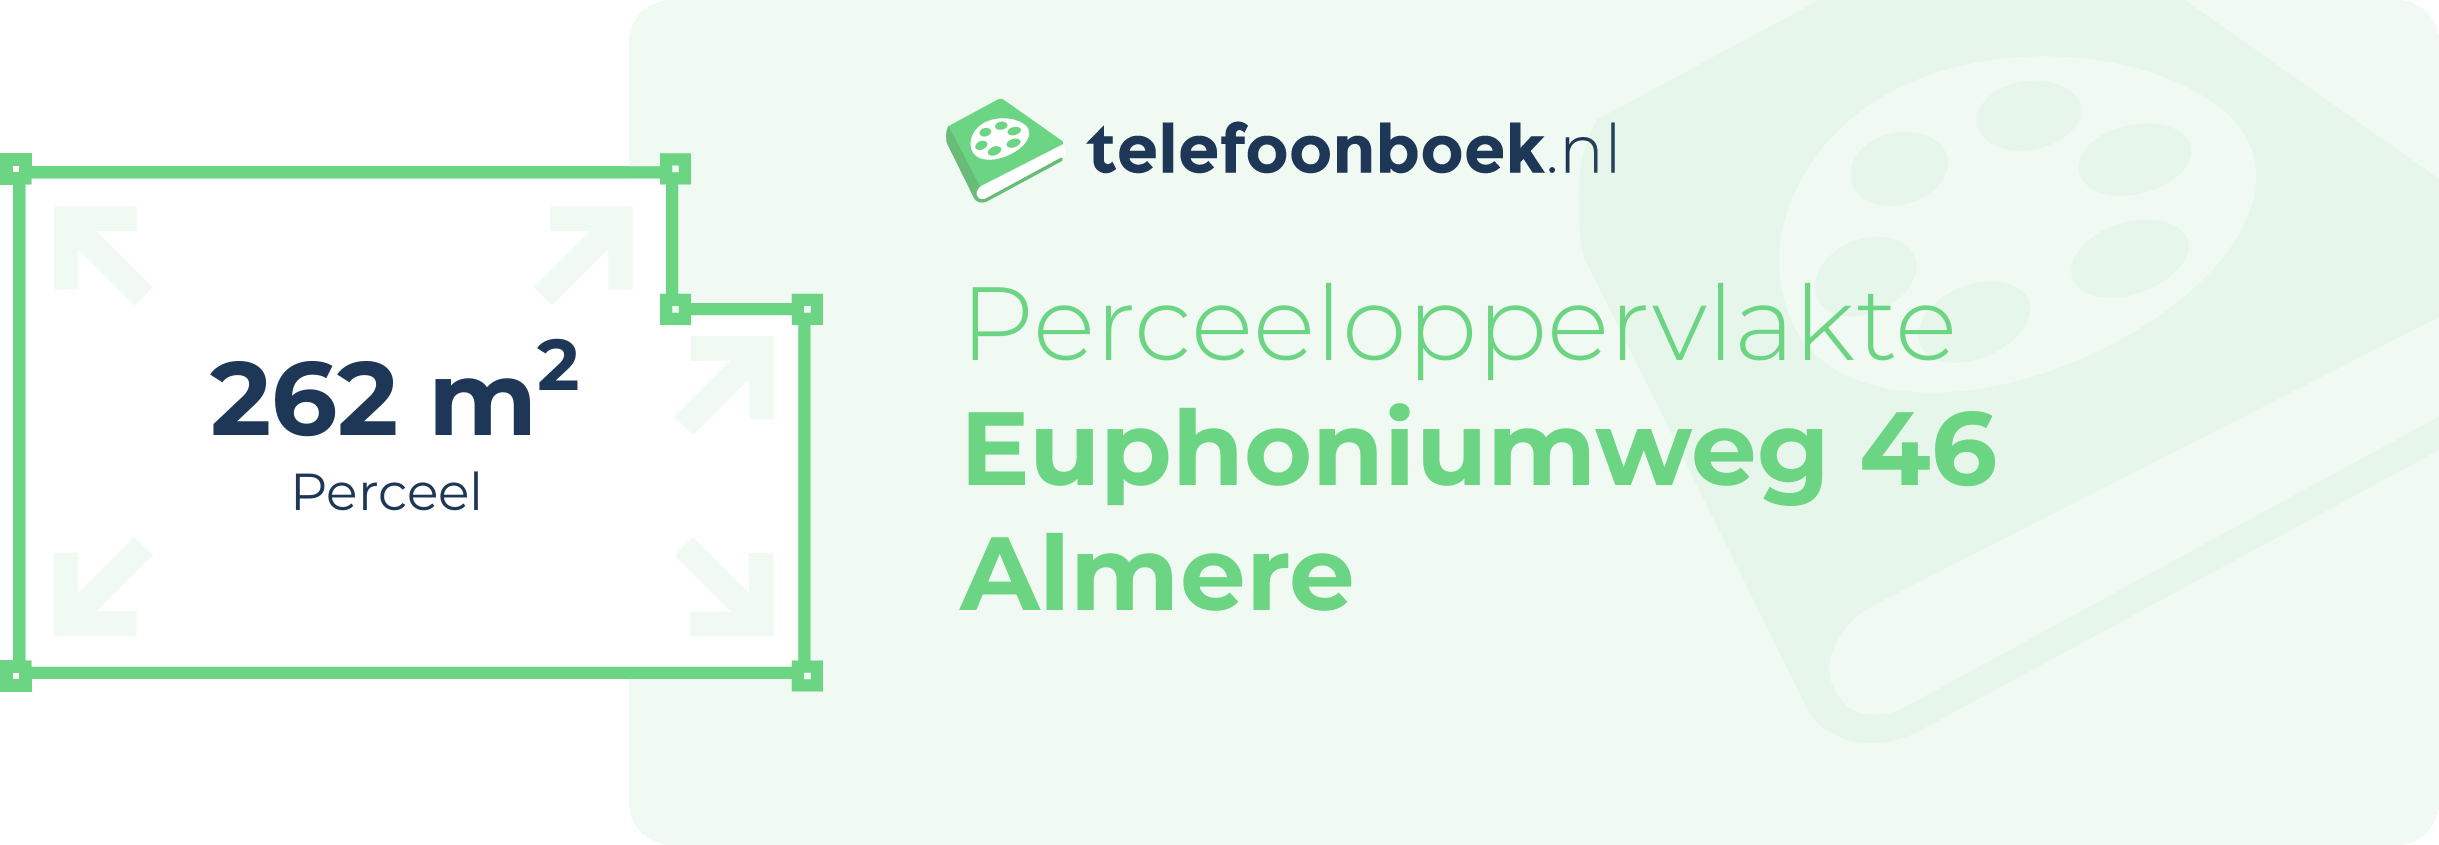 Perceeloppervlakte Euphoniumweg 46 Almere